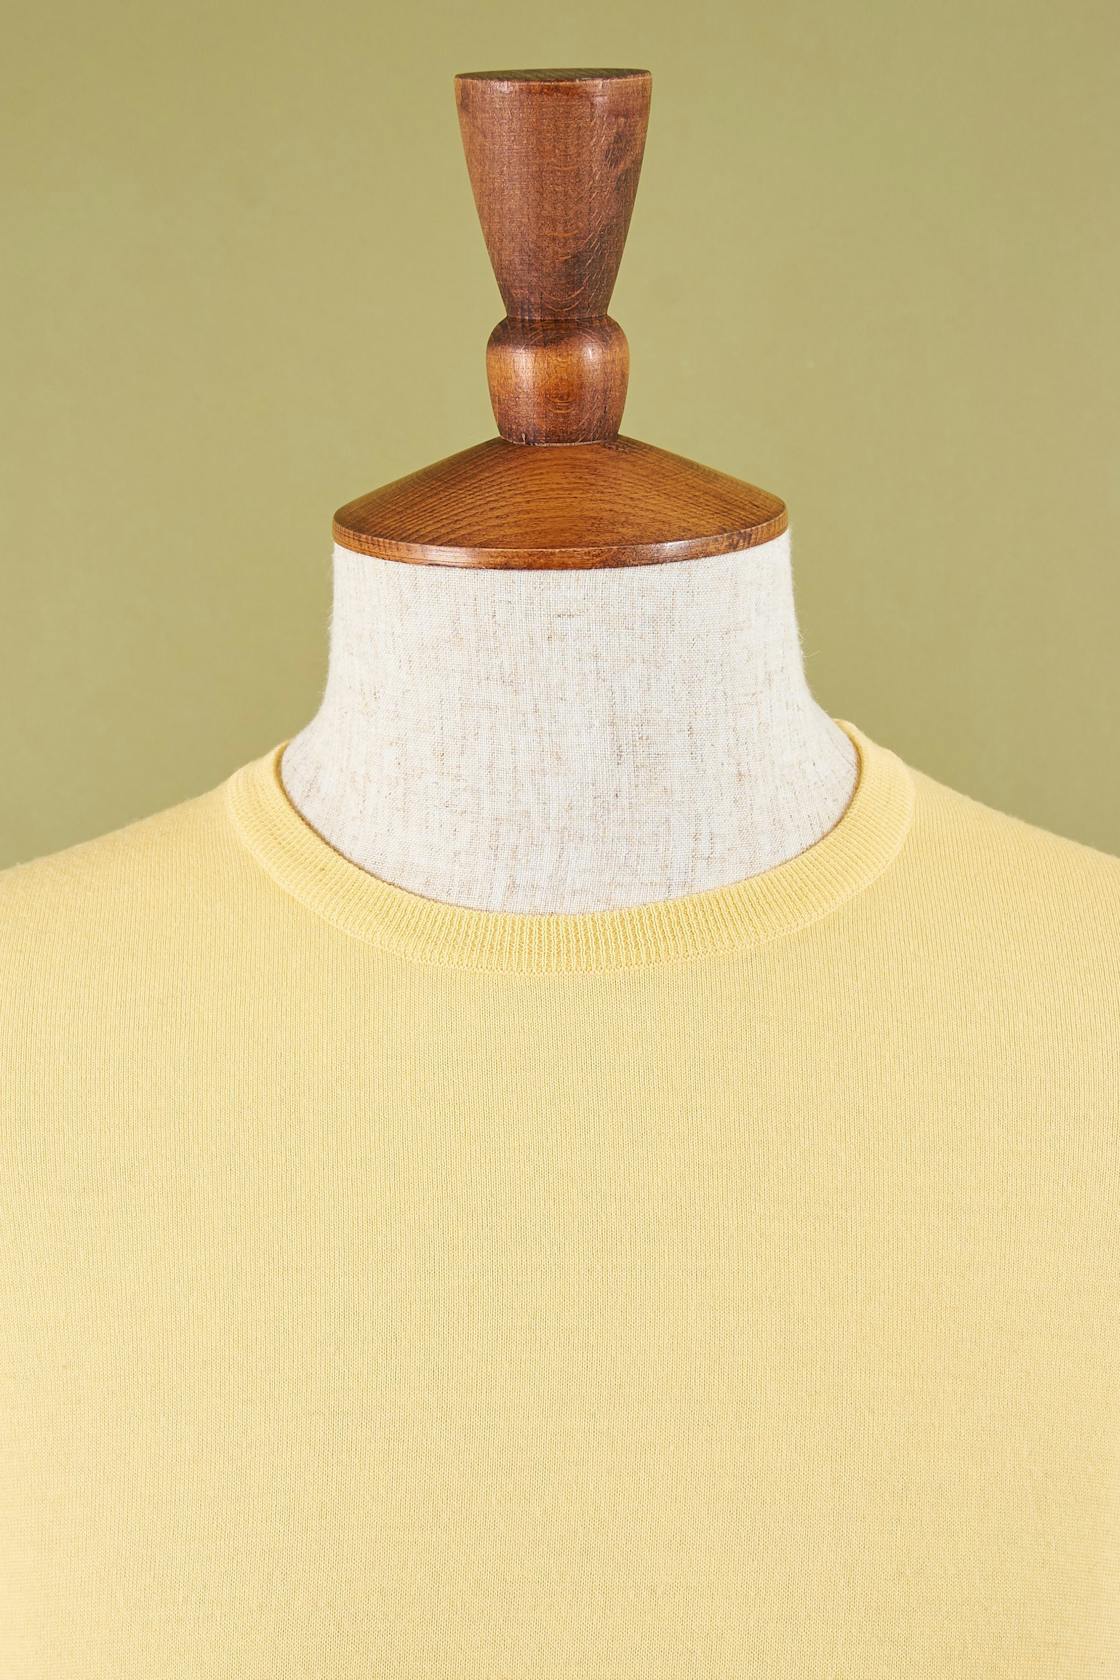 The Armoury Yellow Merino Wool Crewneck Sweater